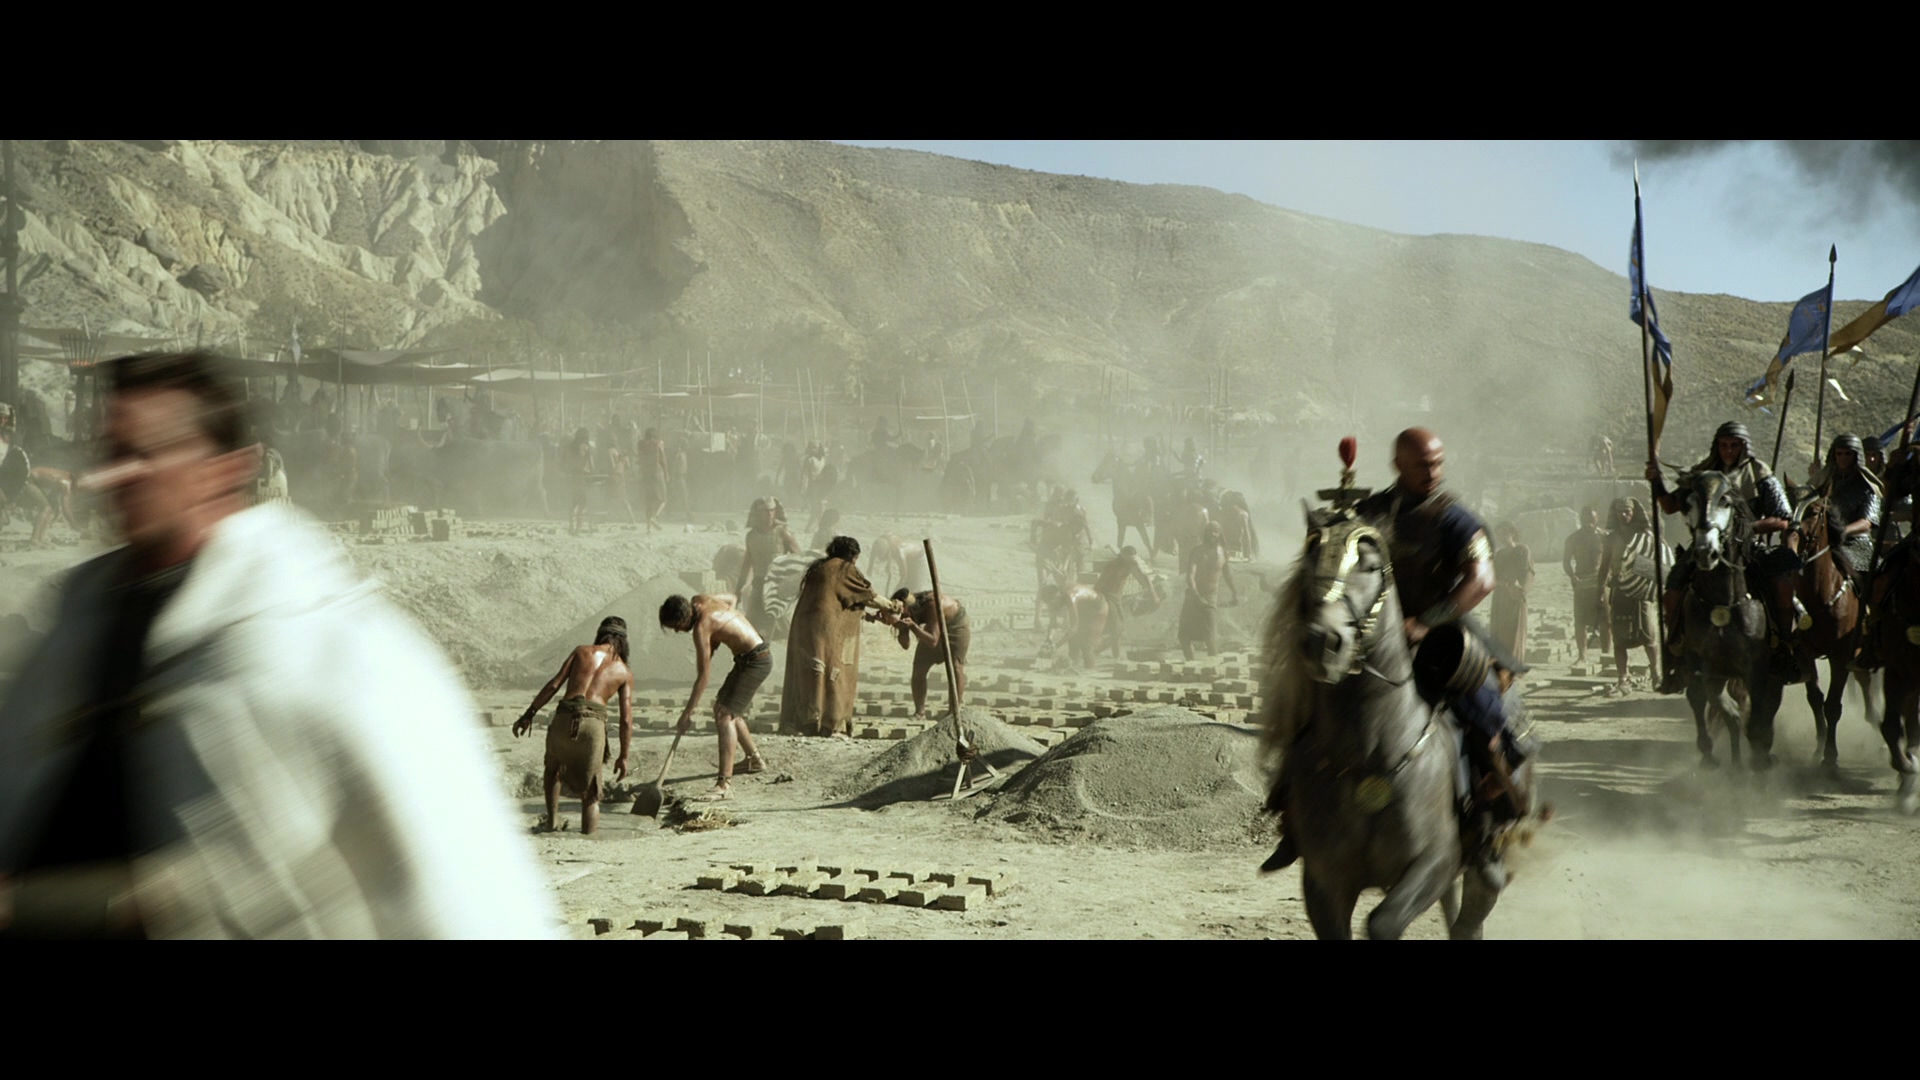 [法老与众神].Exodus.Gods.and.Kings.2014.3D.BluRay.1080p.AVC.DTS-HD.MA.7.1-HDBEE    45.26G-3.jpg